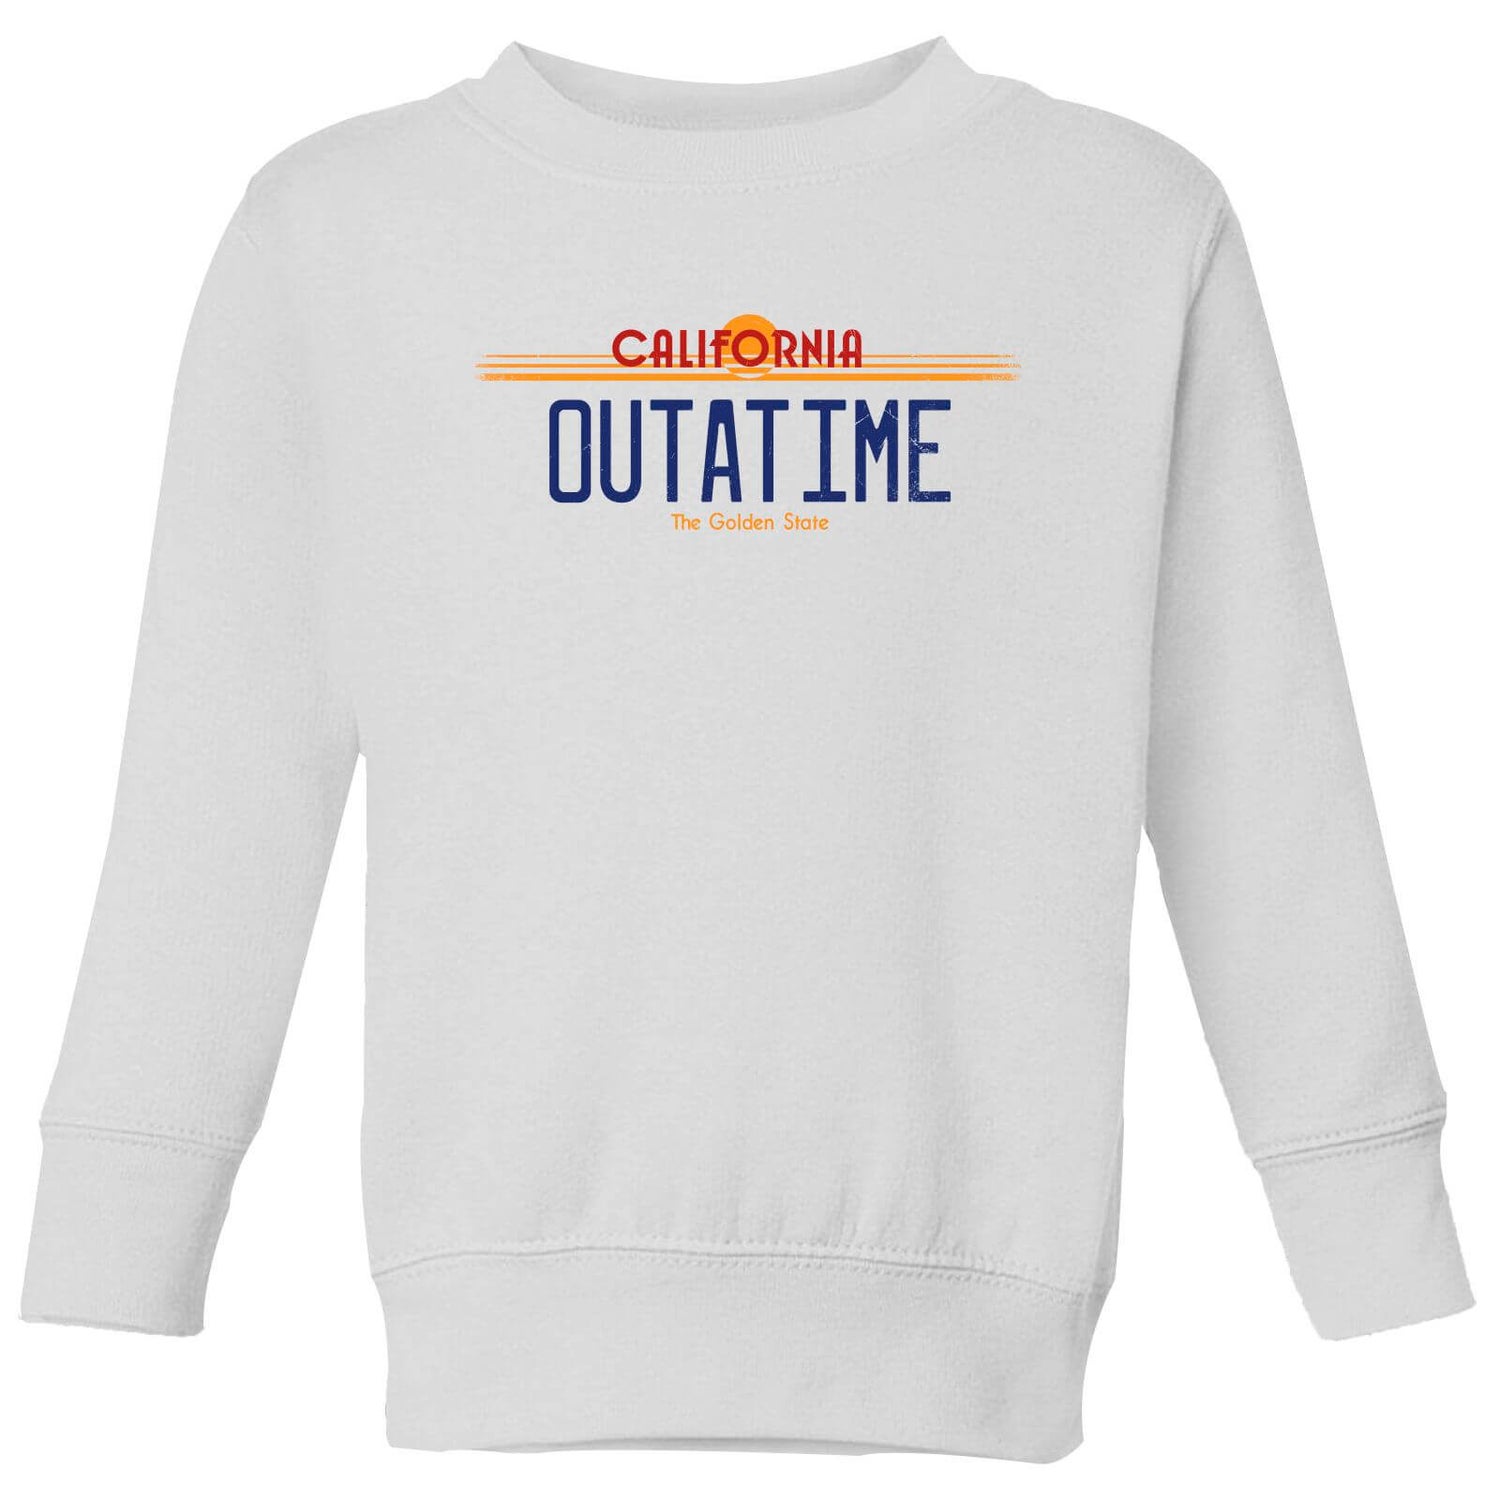 Back To The Future Outatime Plate Kids' Sweatshirt - White